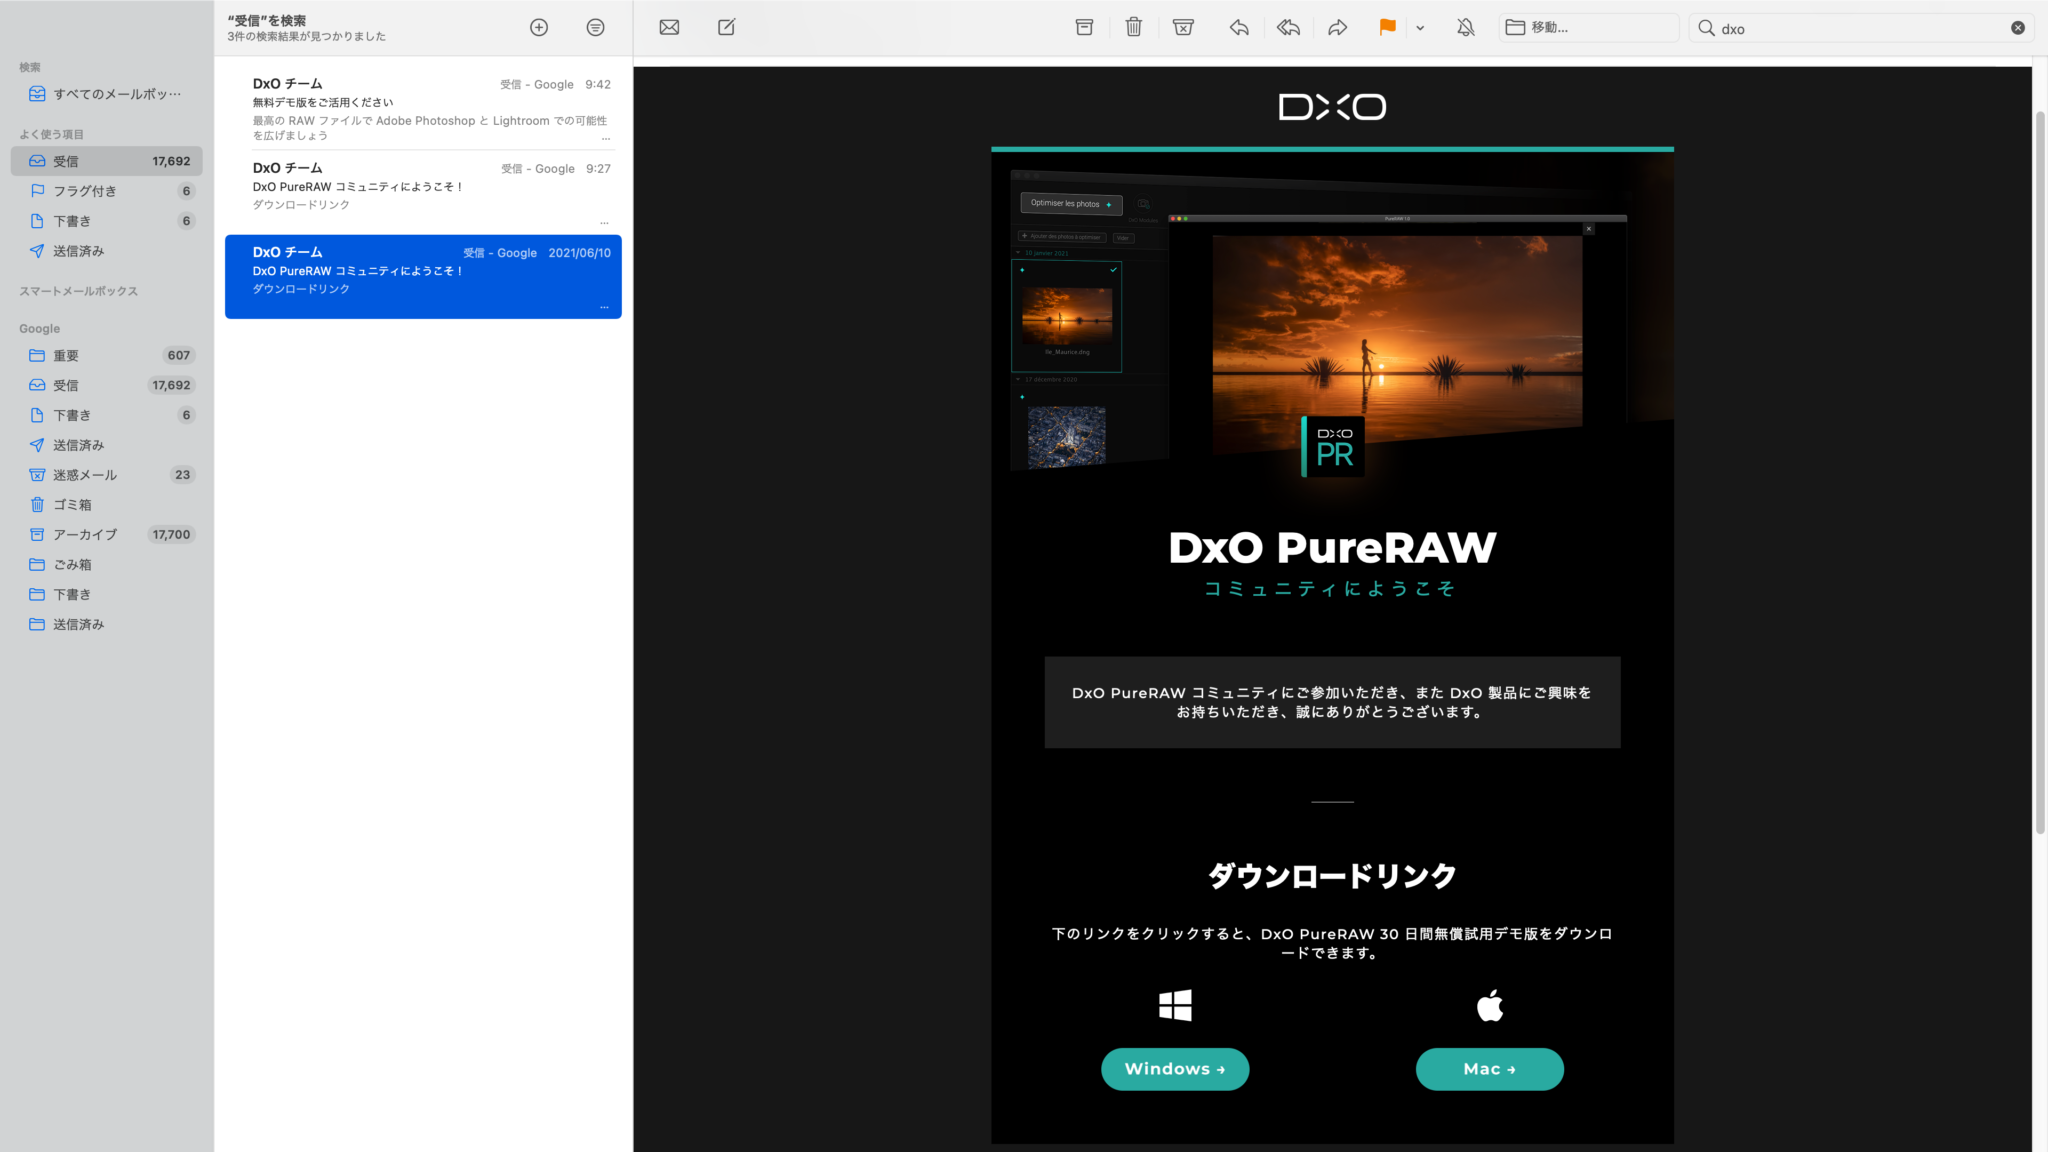 DxO PureRAW 3.4.0.16 for ios instal free